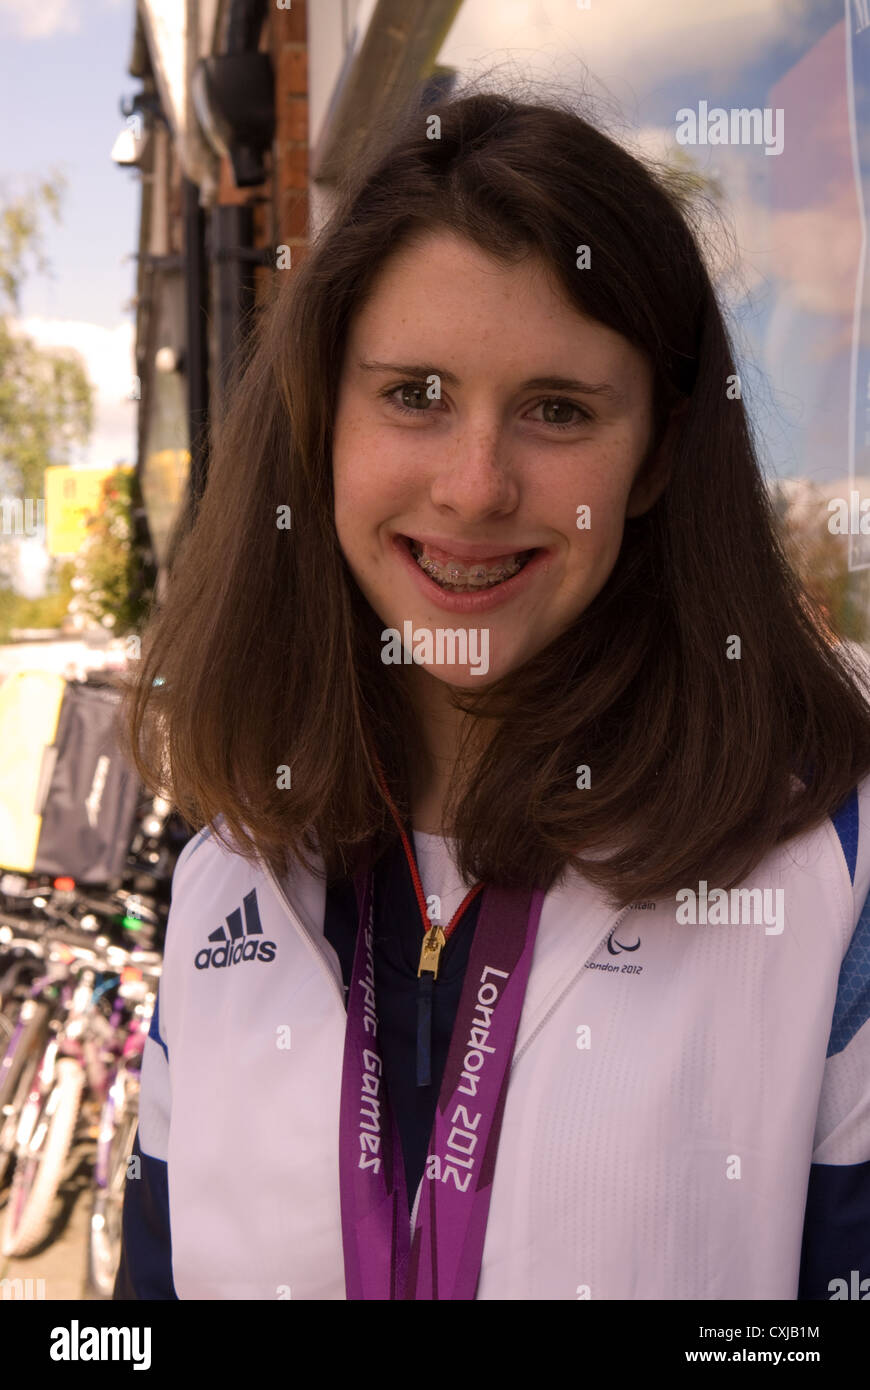 Olivia Breen, Bronze Paralympics Medaillengewinner bei Olympischen Spielen London 2012. Stockfoto